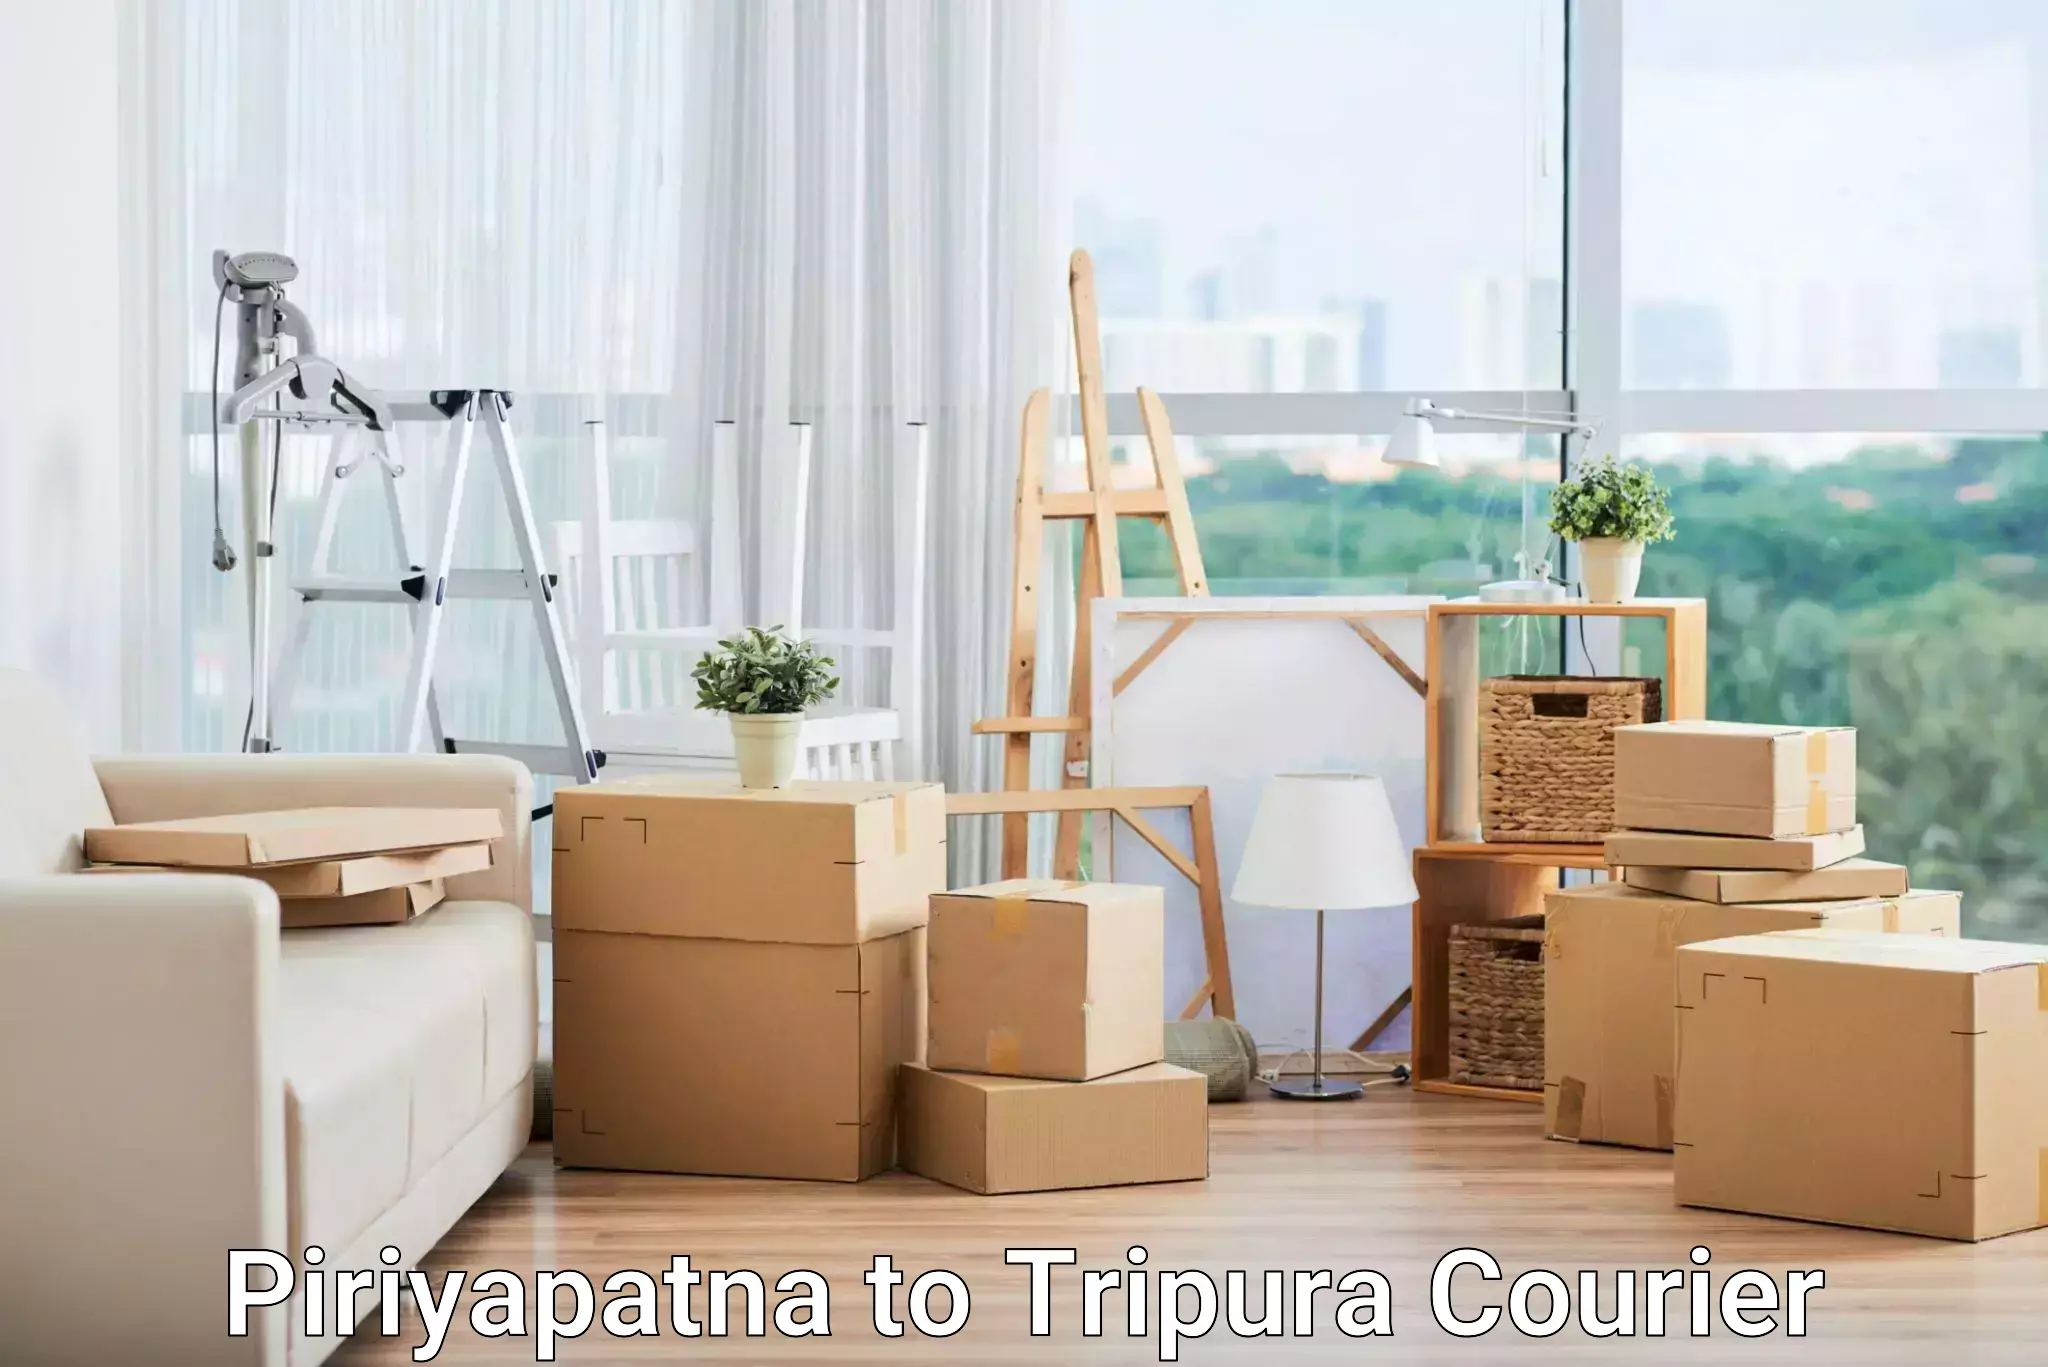 Same-day delivery options Piriyapatna to Udaipur Tripura